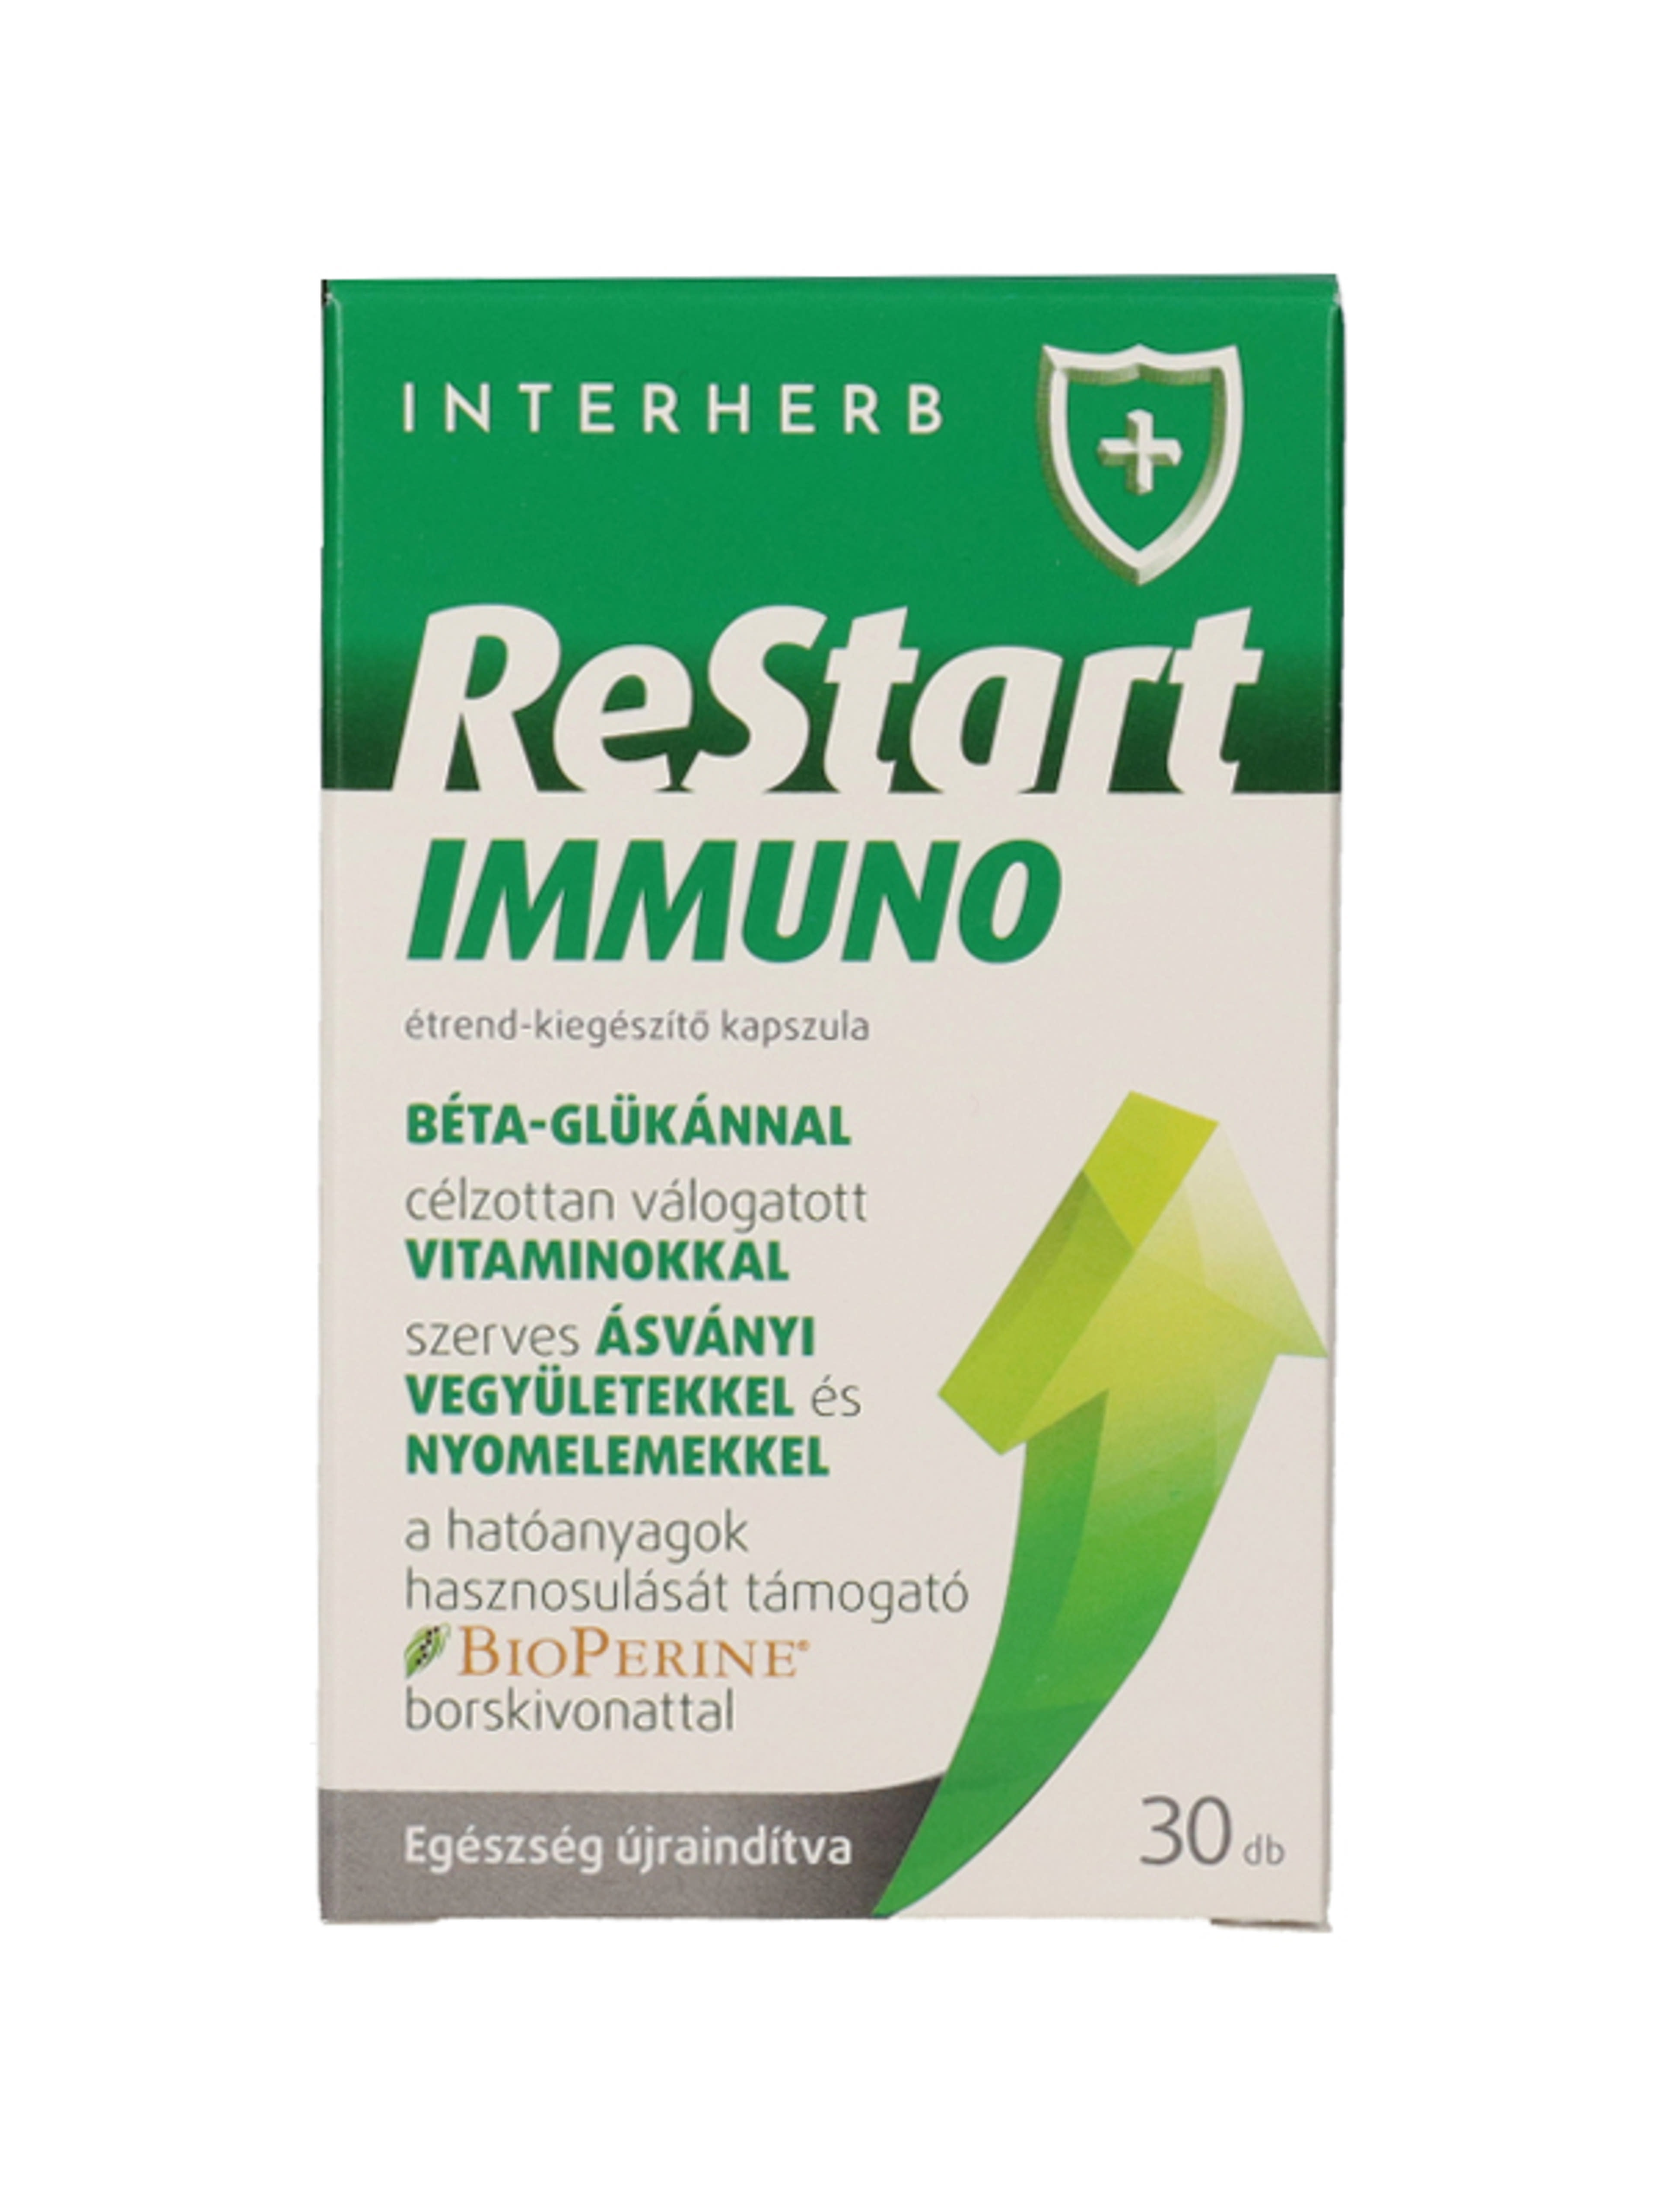 Interherb Restart Immuno kapszula - 30 db